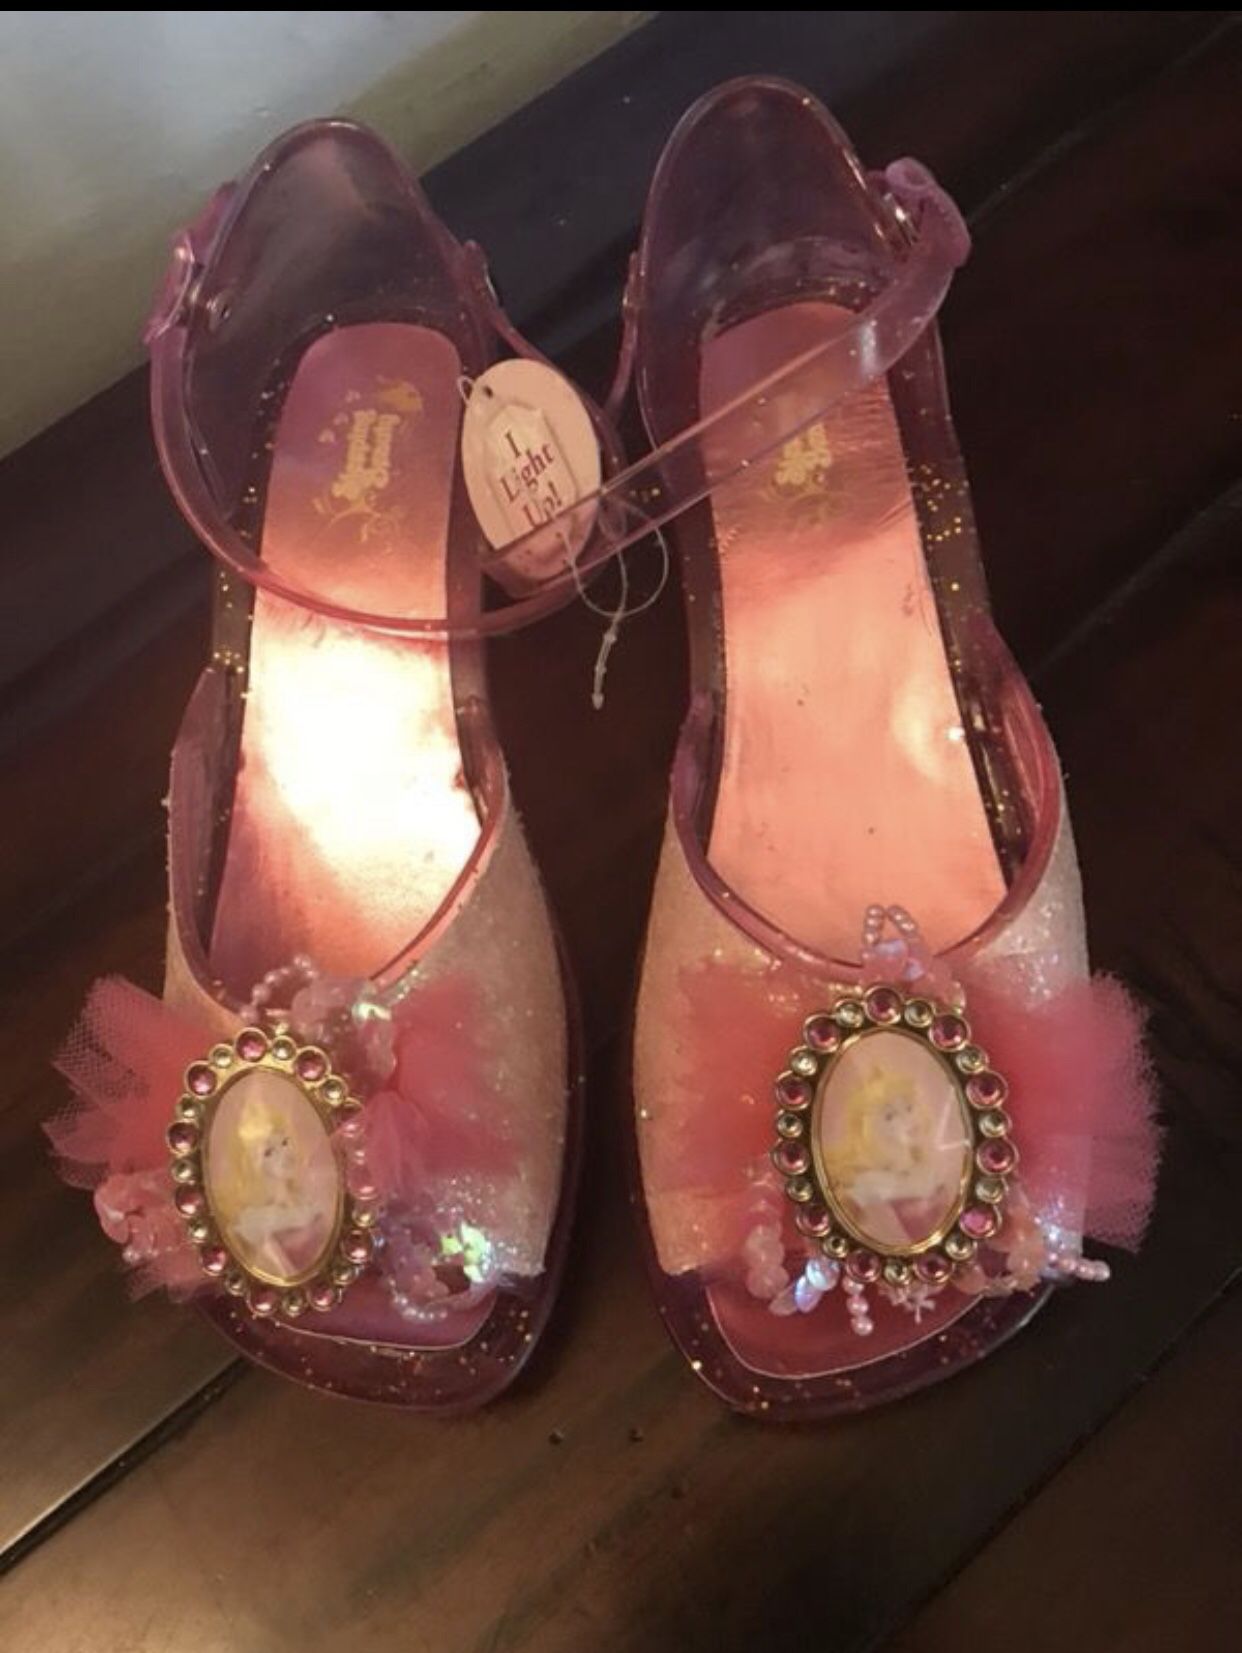 BRAND NEW Disney Princess 👸 Aurora-sleeping beauty LIGHT-UP HEEL shoes Youth size 2/3